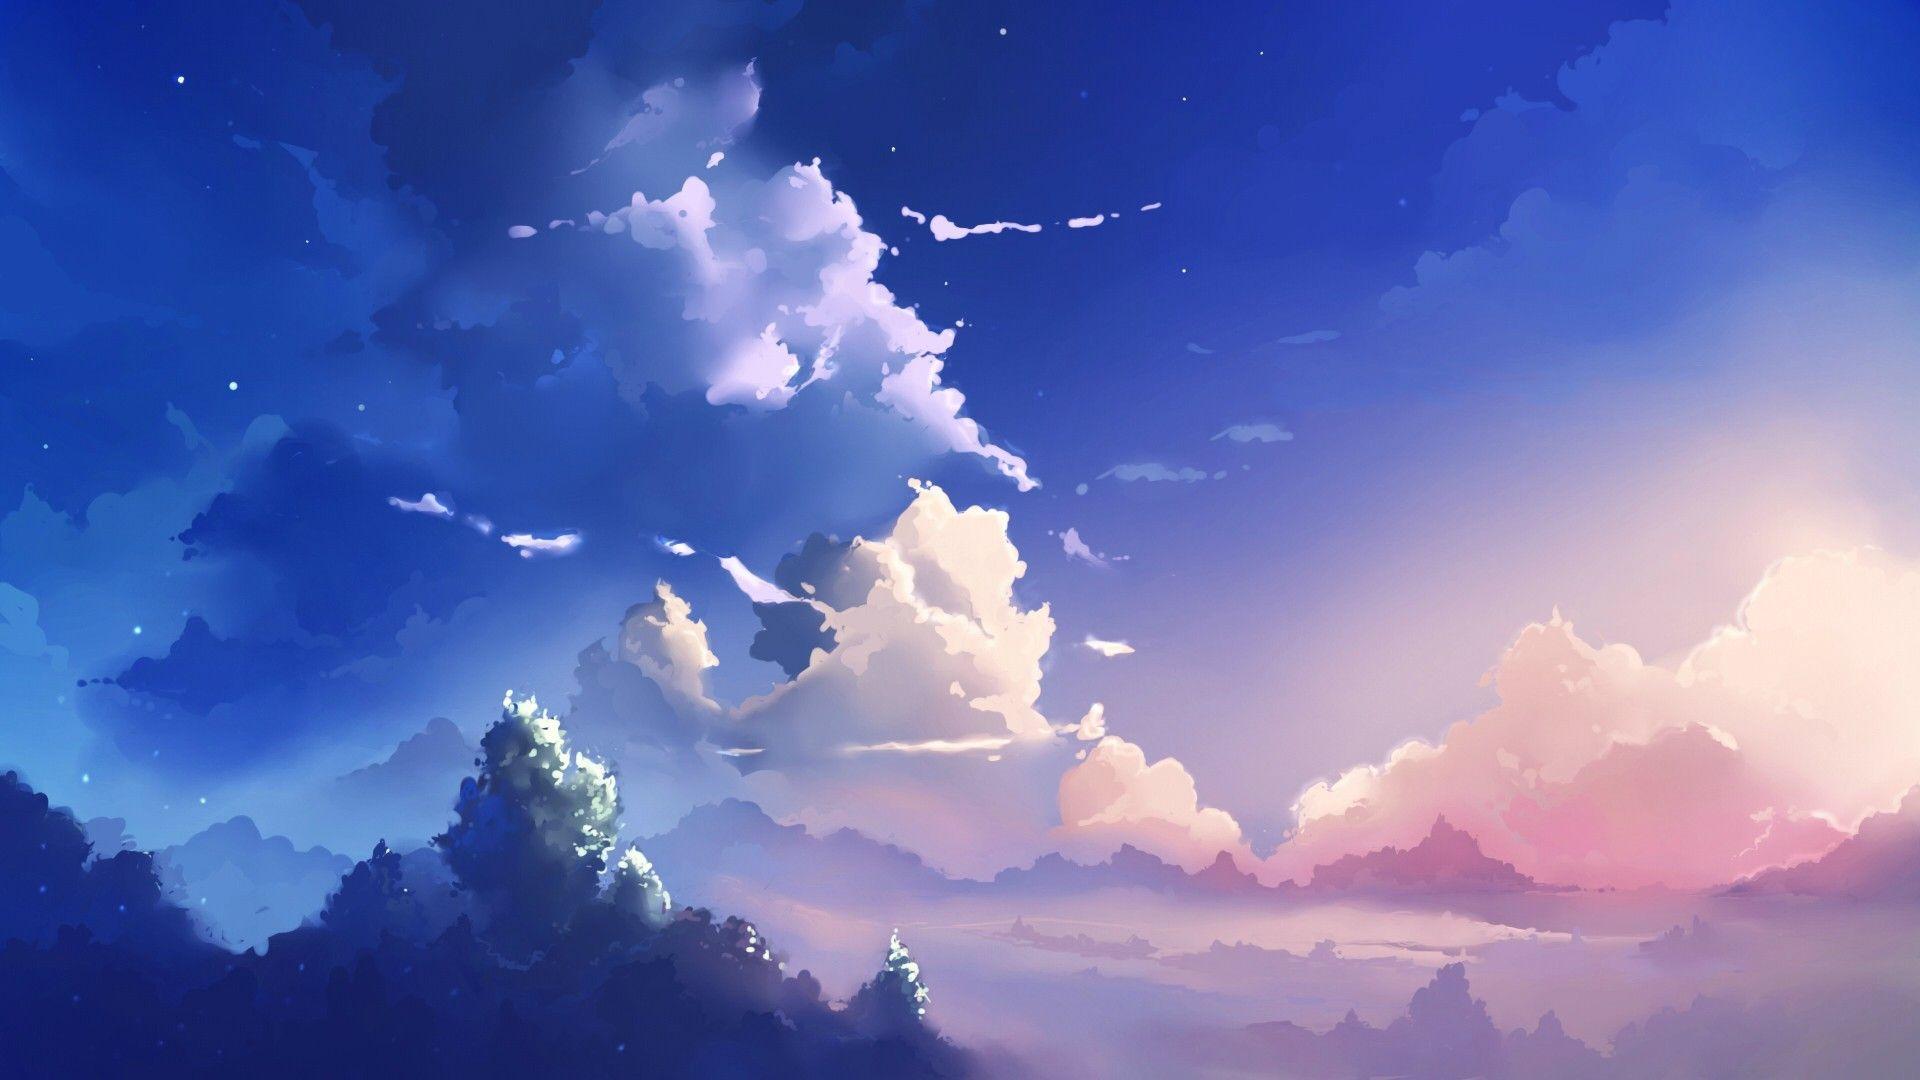 Anime Cloud Wallpapers - Top Free Anime